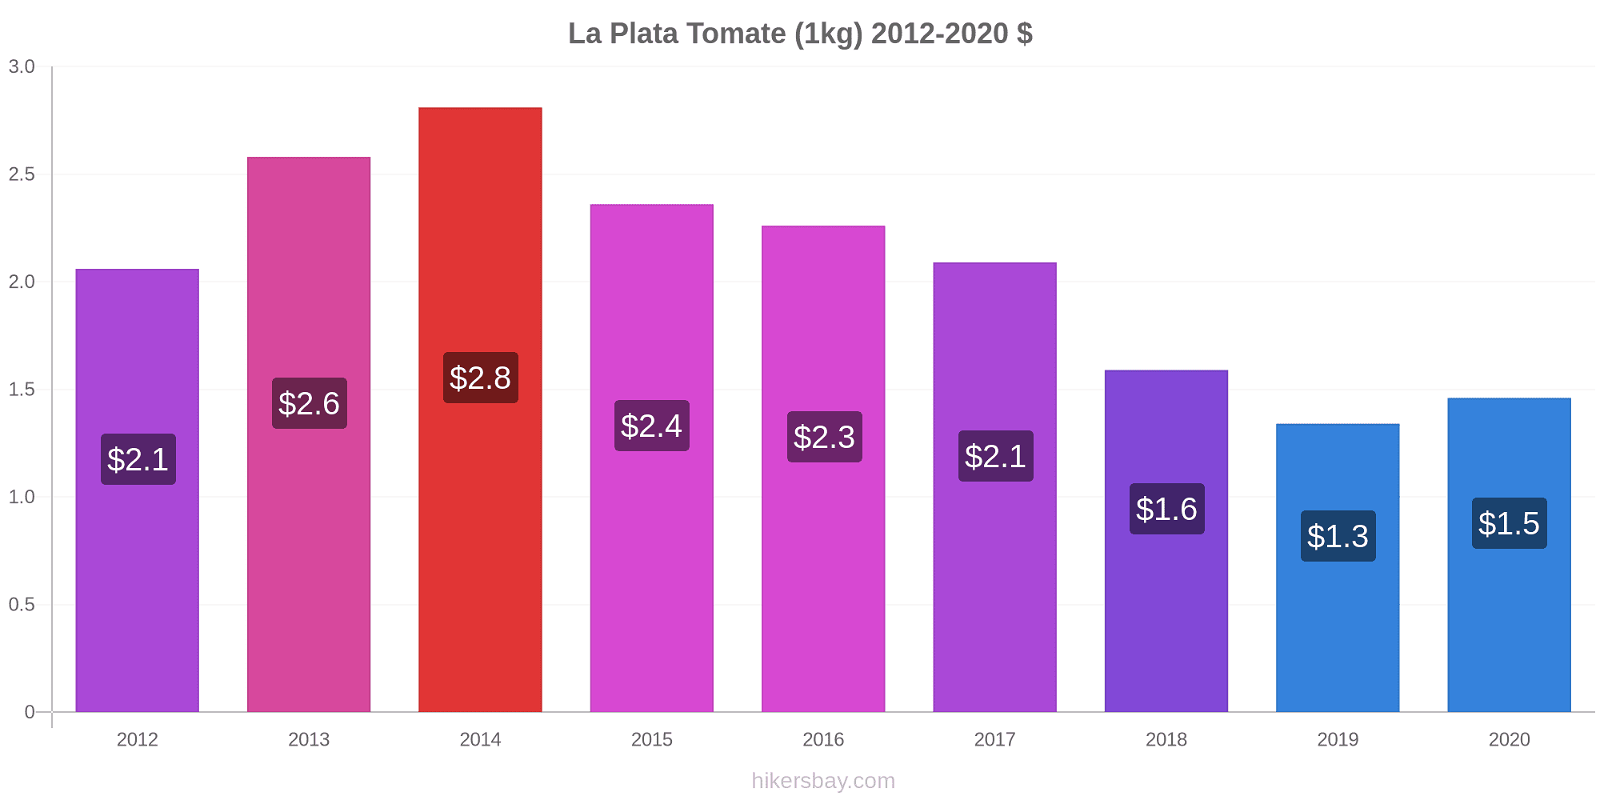 La Plata Preisänderungen Tomaten (1kg) hikersbay.com